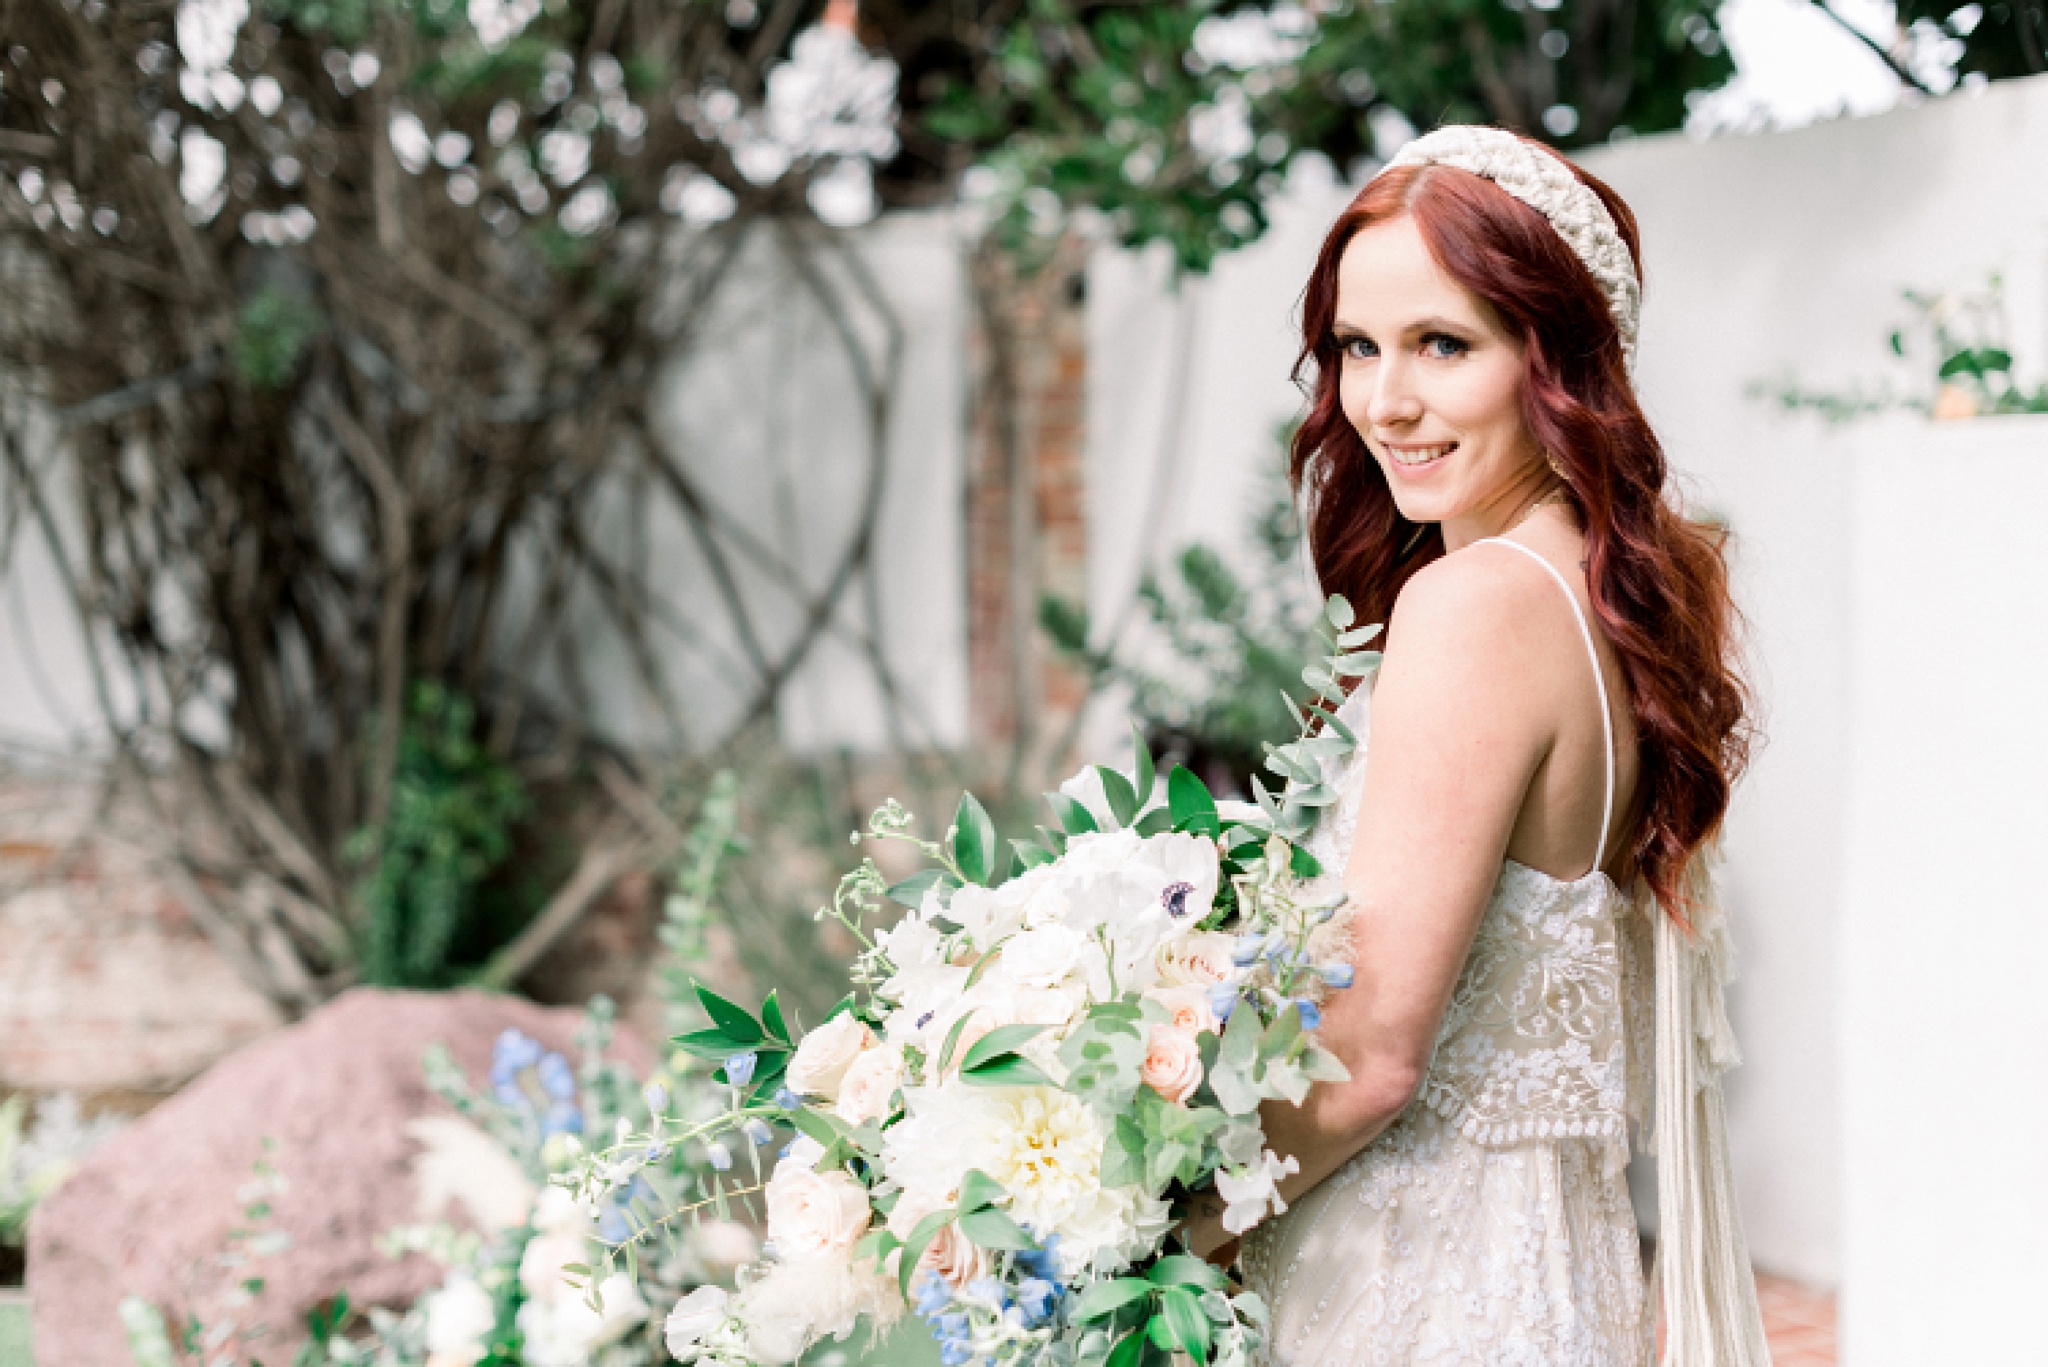 Bride holding a bouquet at Orange County Outdoor Wedding Venues